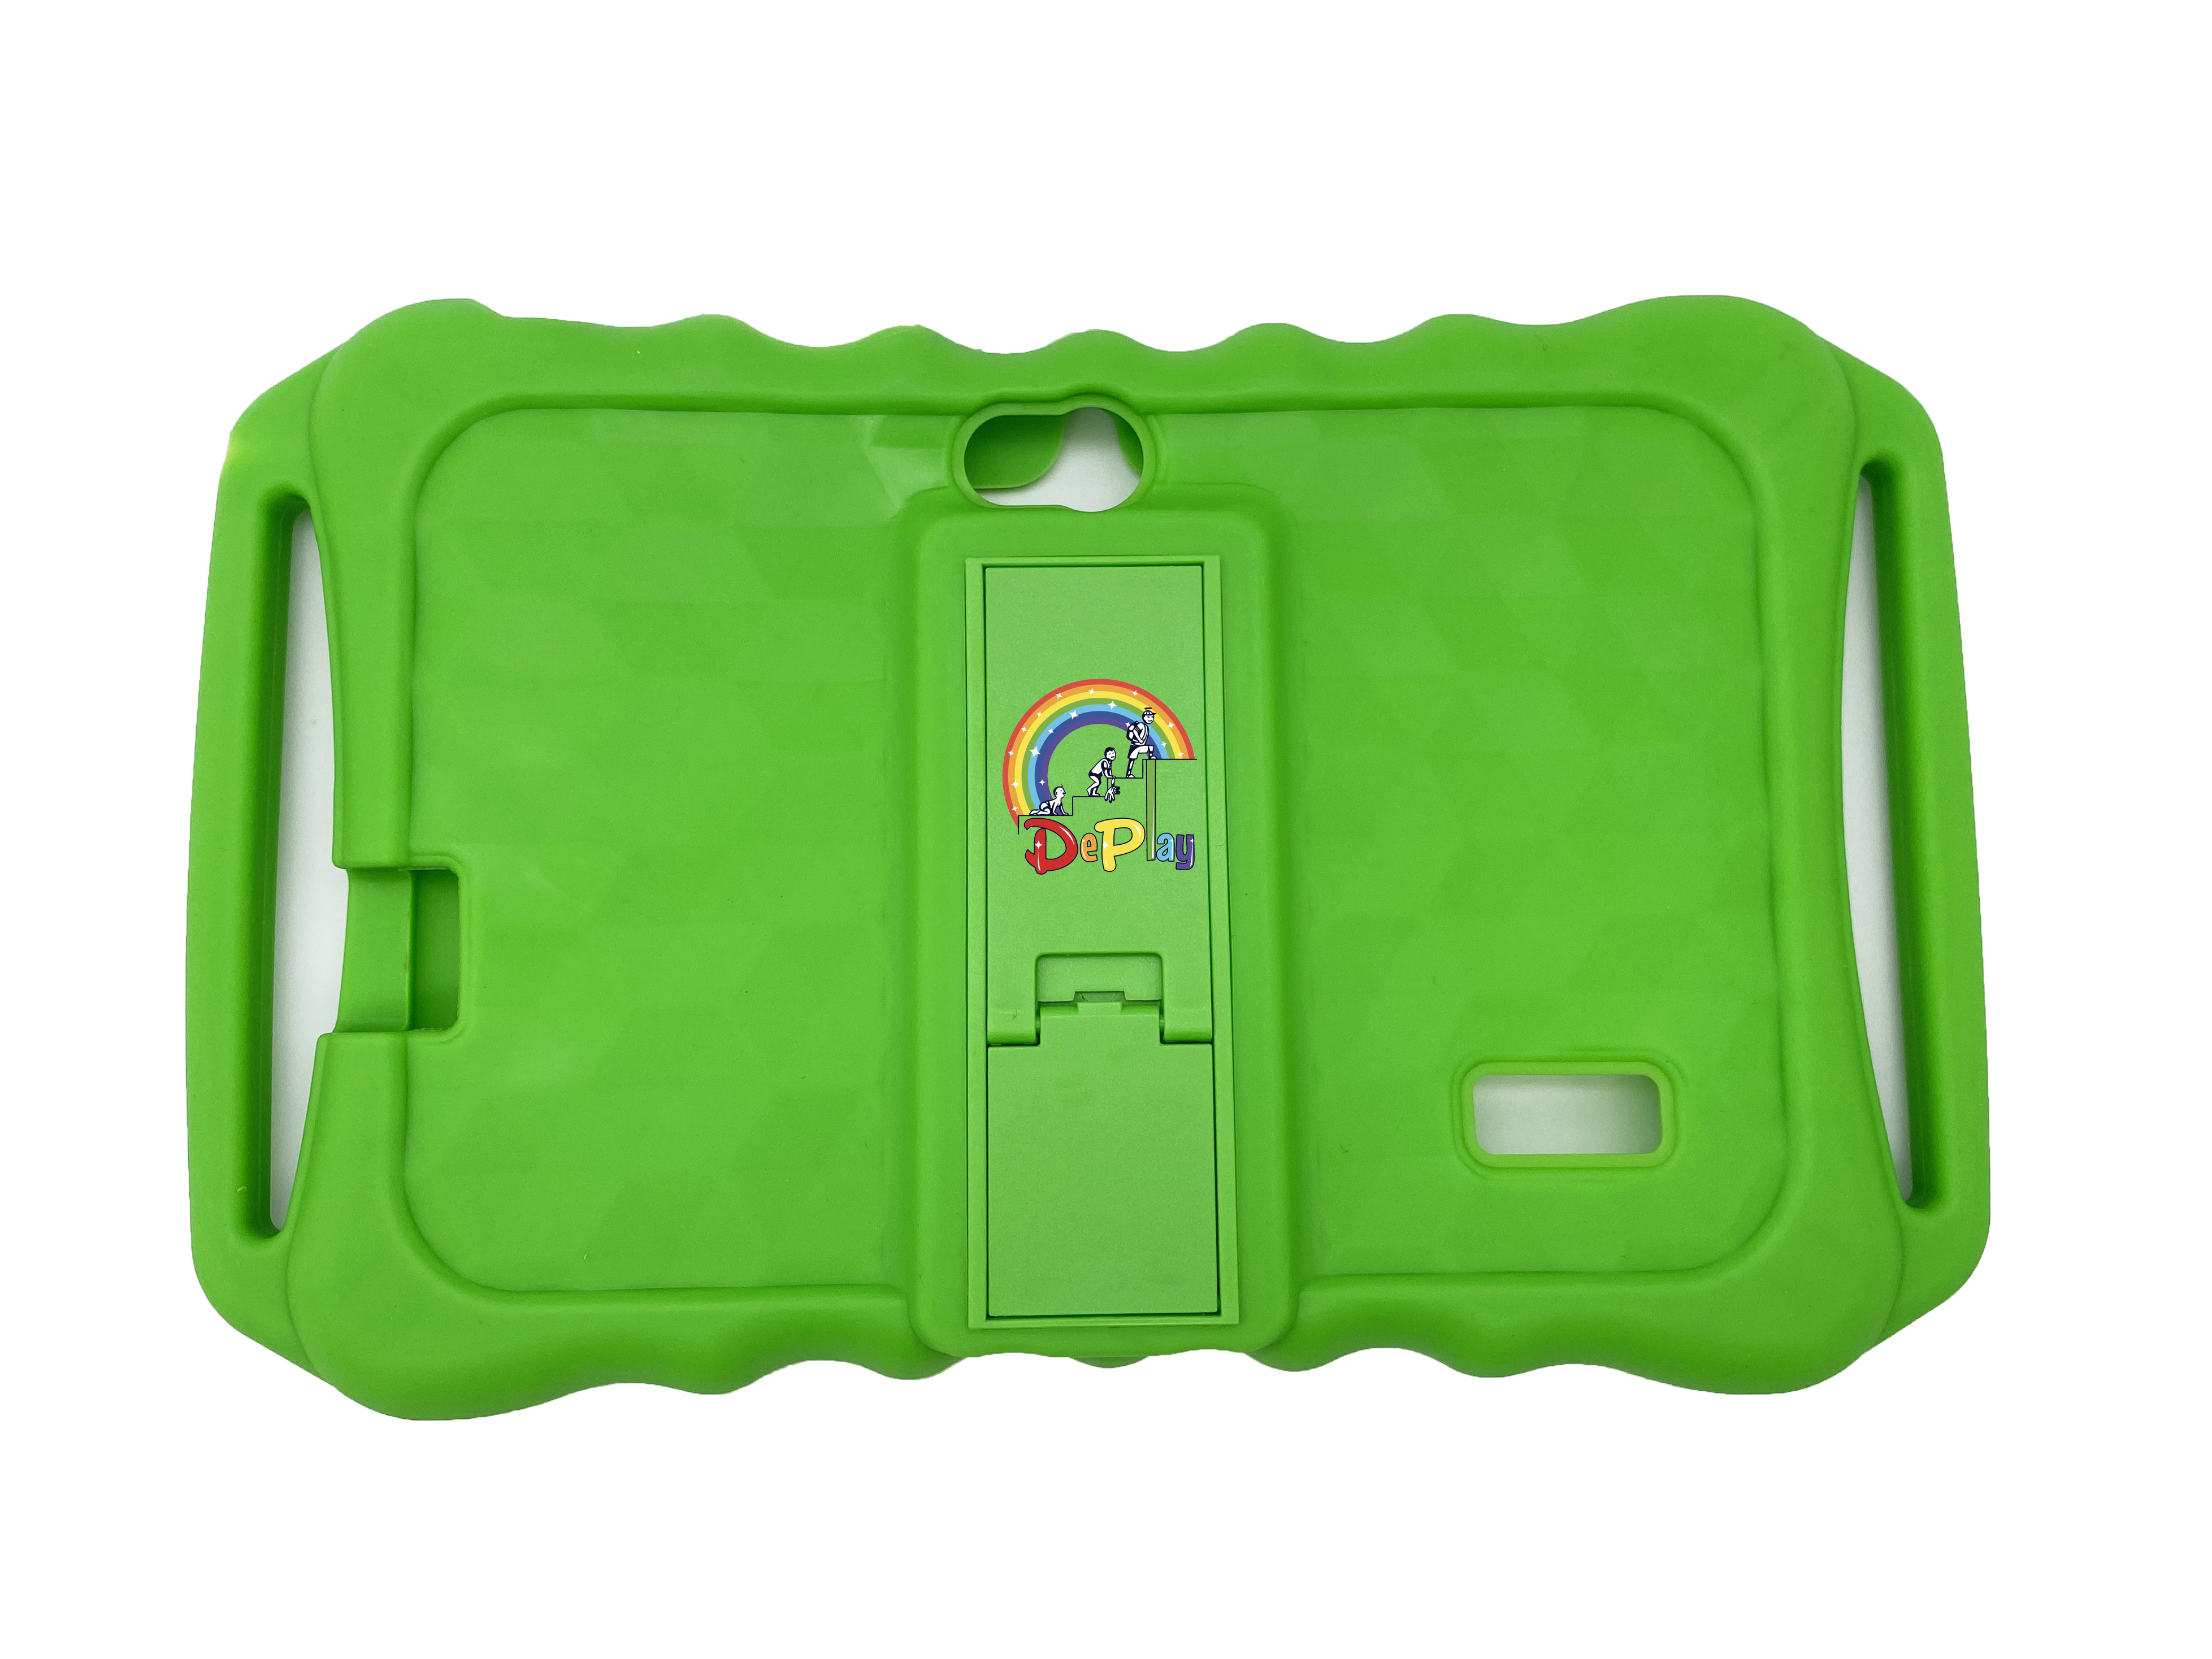 DePlay Kinder Tablet Silikon Schutzhülle - Grün